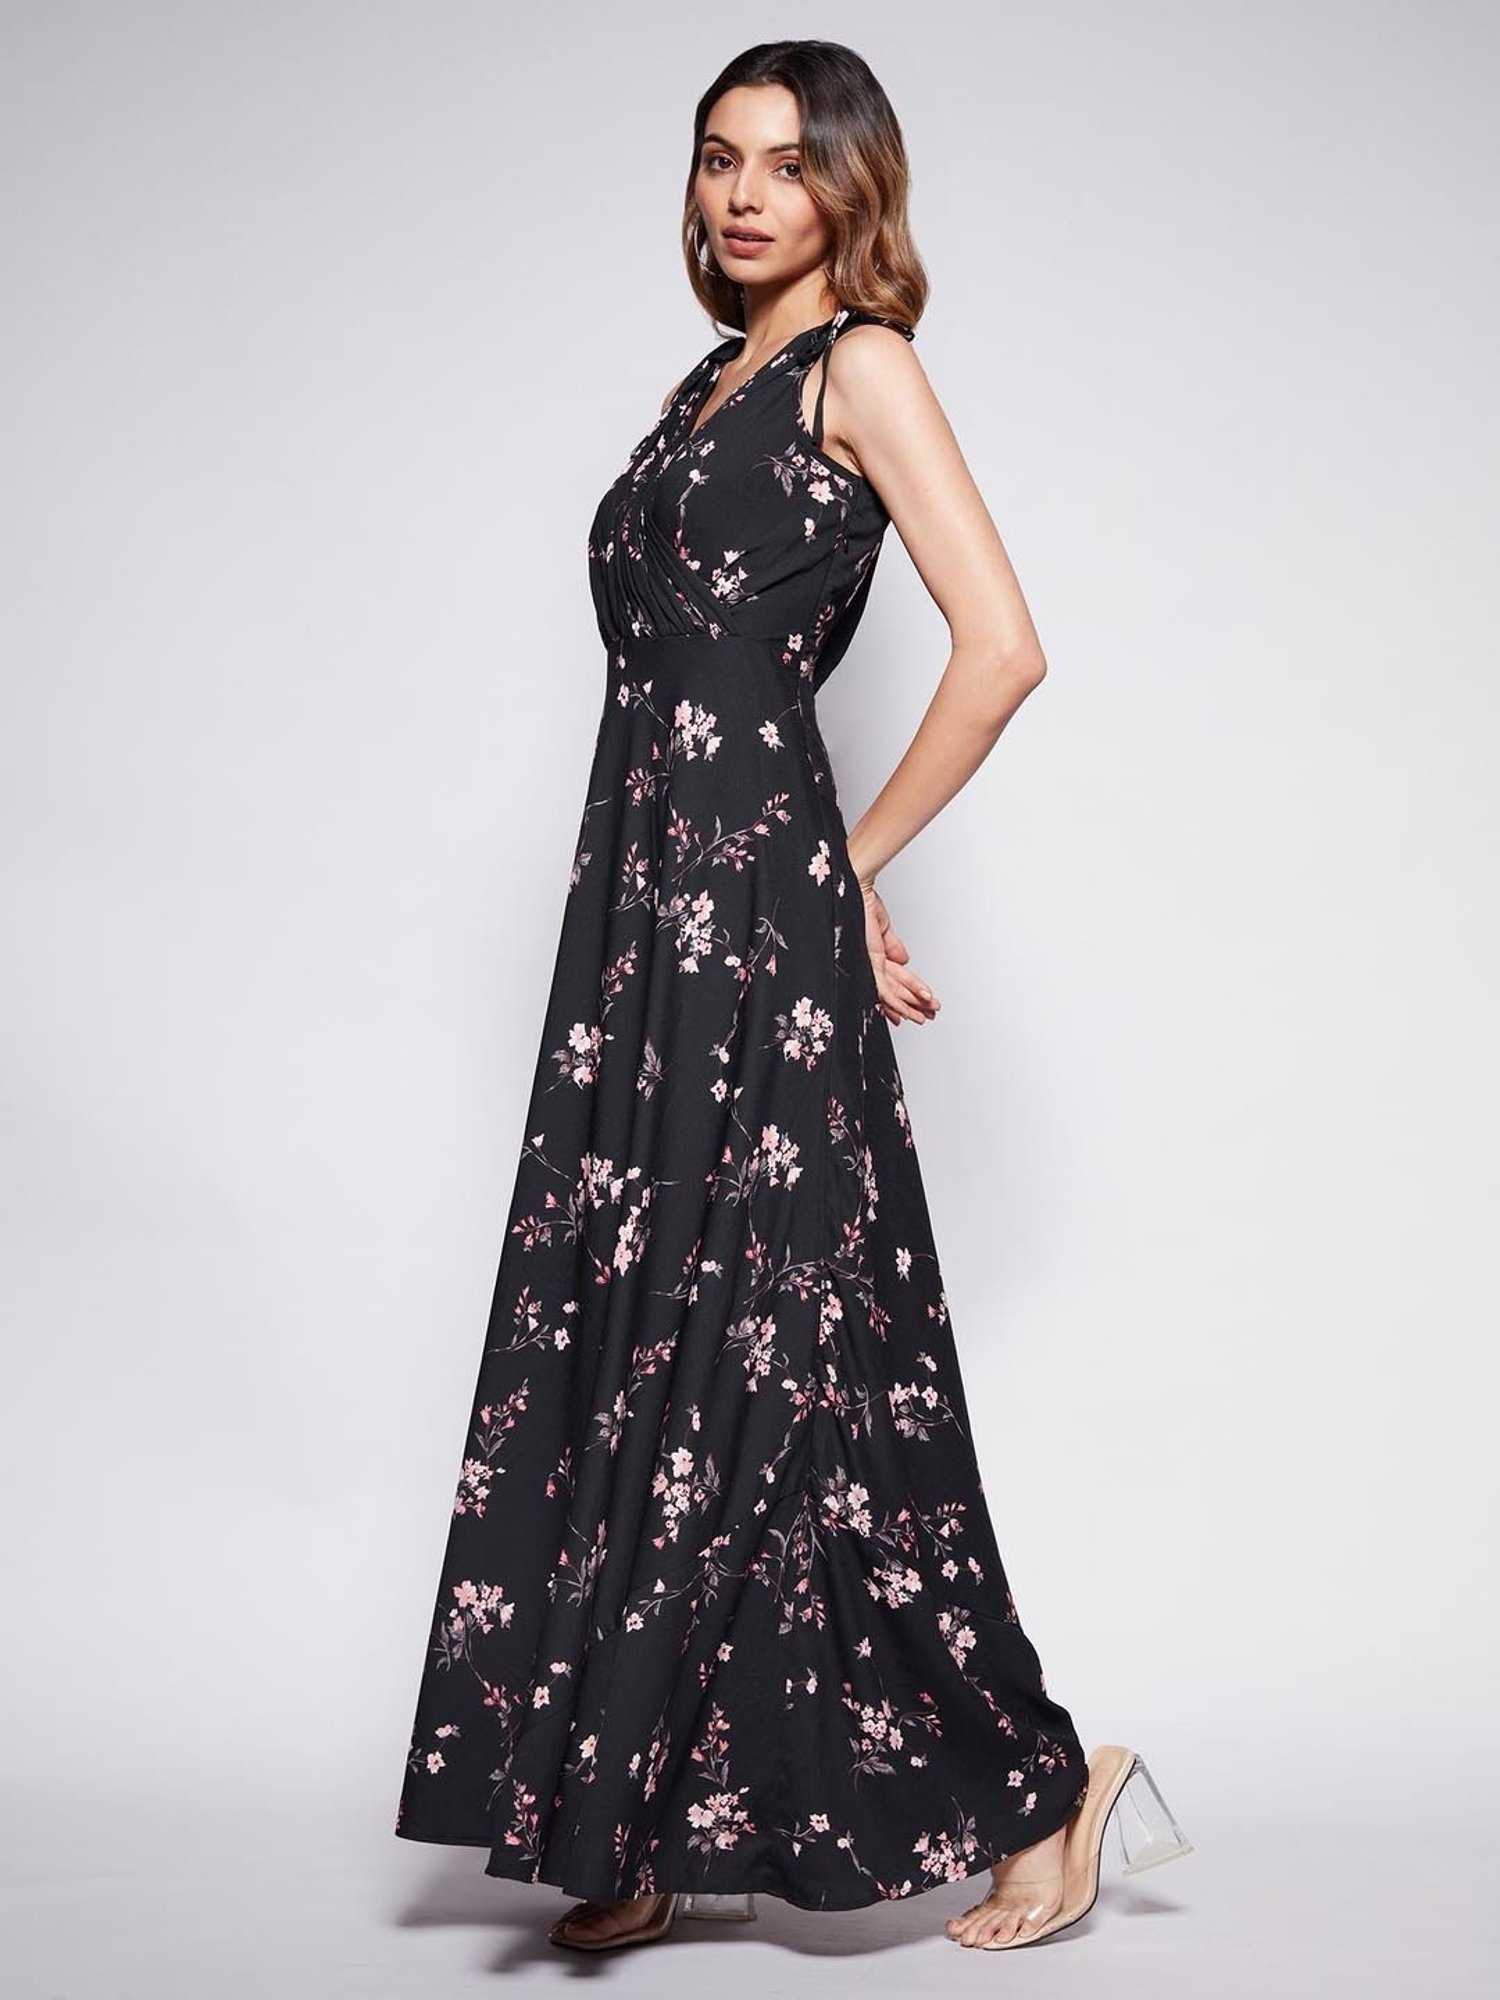 Buy Rare Black Floral Print Maxi Dress for Women's Online @ Tata CLiQ